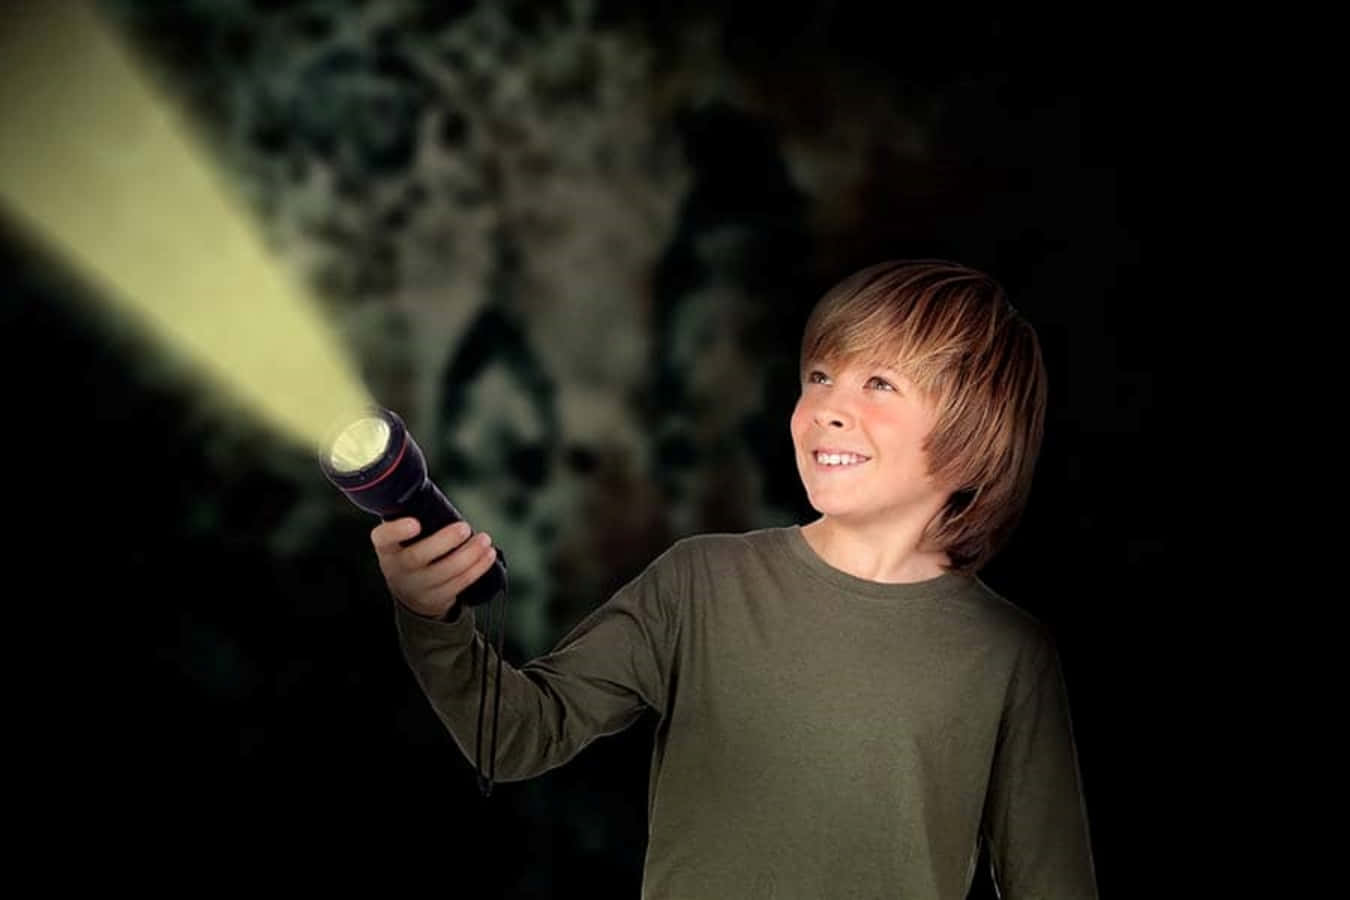 A Boy Holding A Flashlight